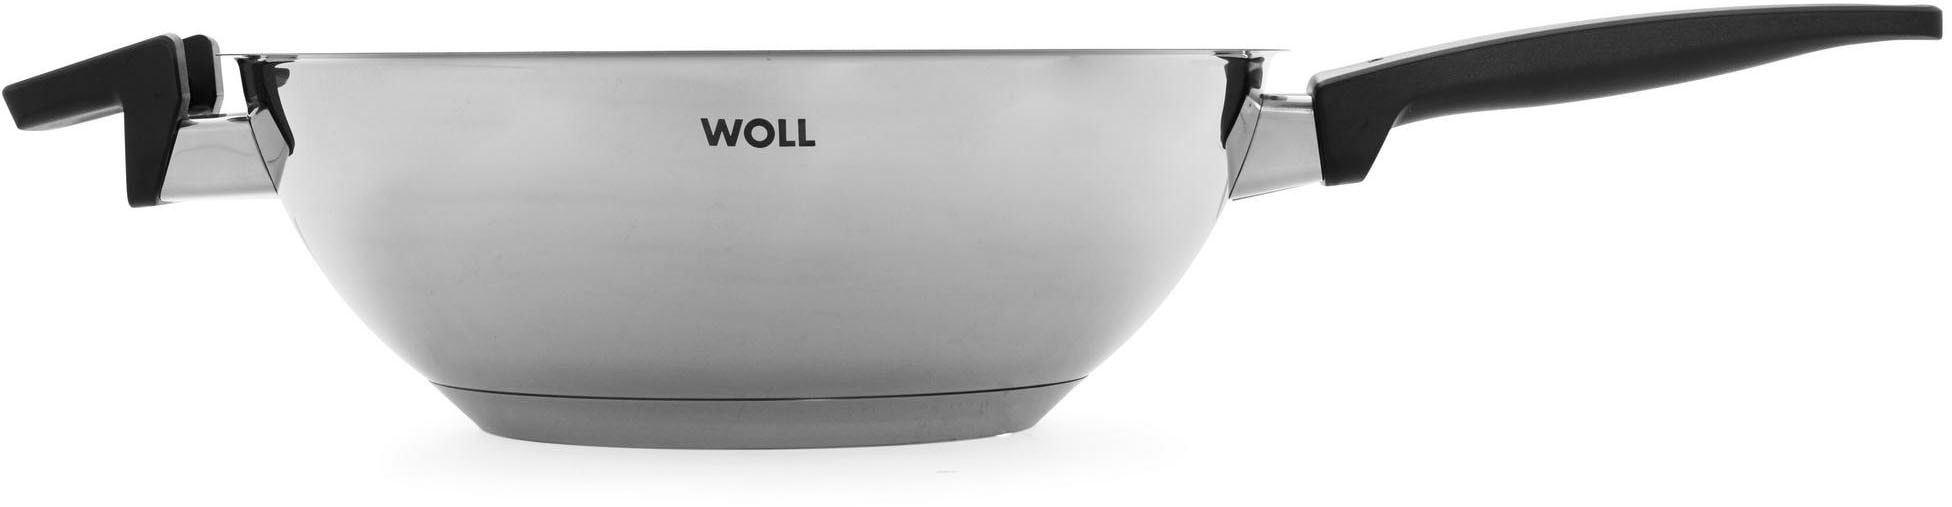 WOLL Wok »Concept«, Edelstahl 18/10, Ø 30 cm, induktionsgeeignet